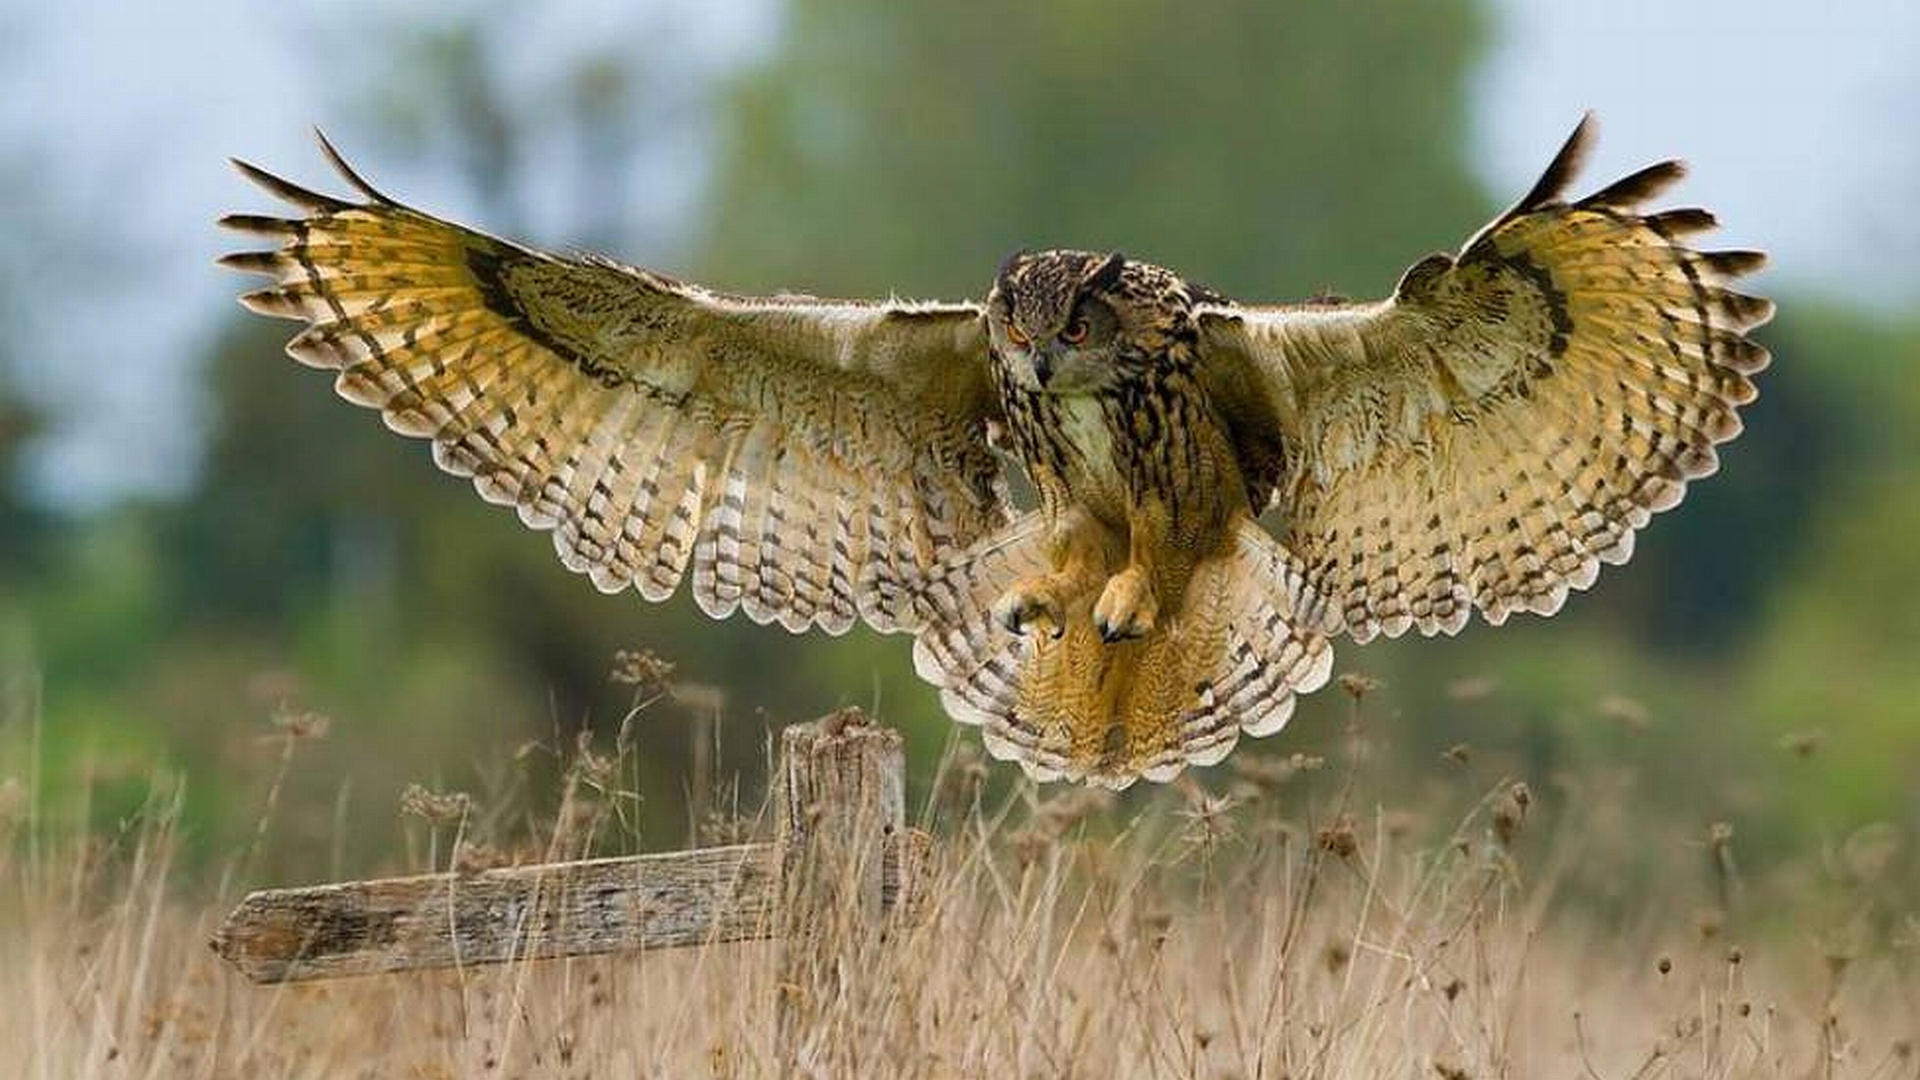 Animal Owl HD Wallpaper | Background Image